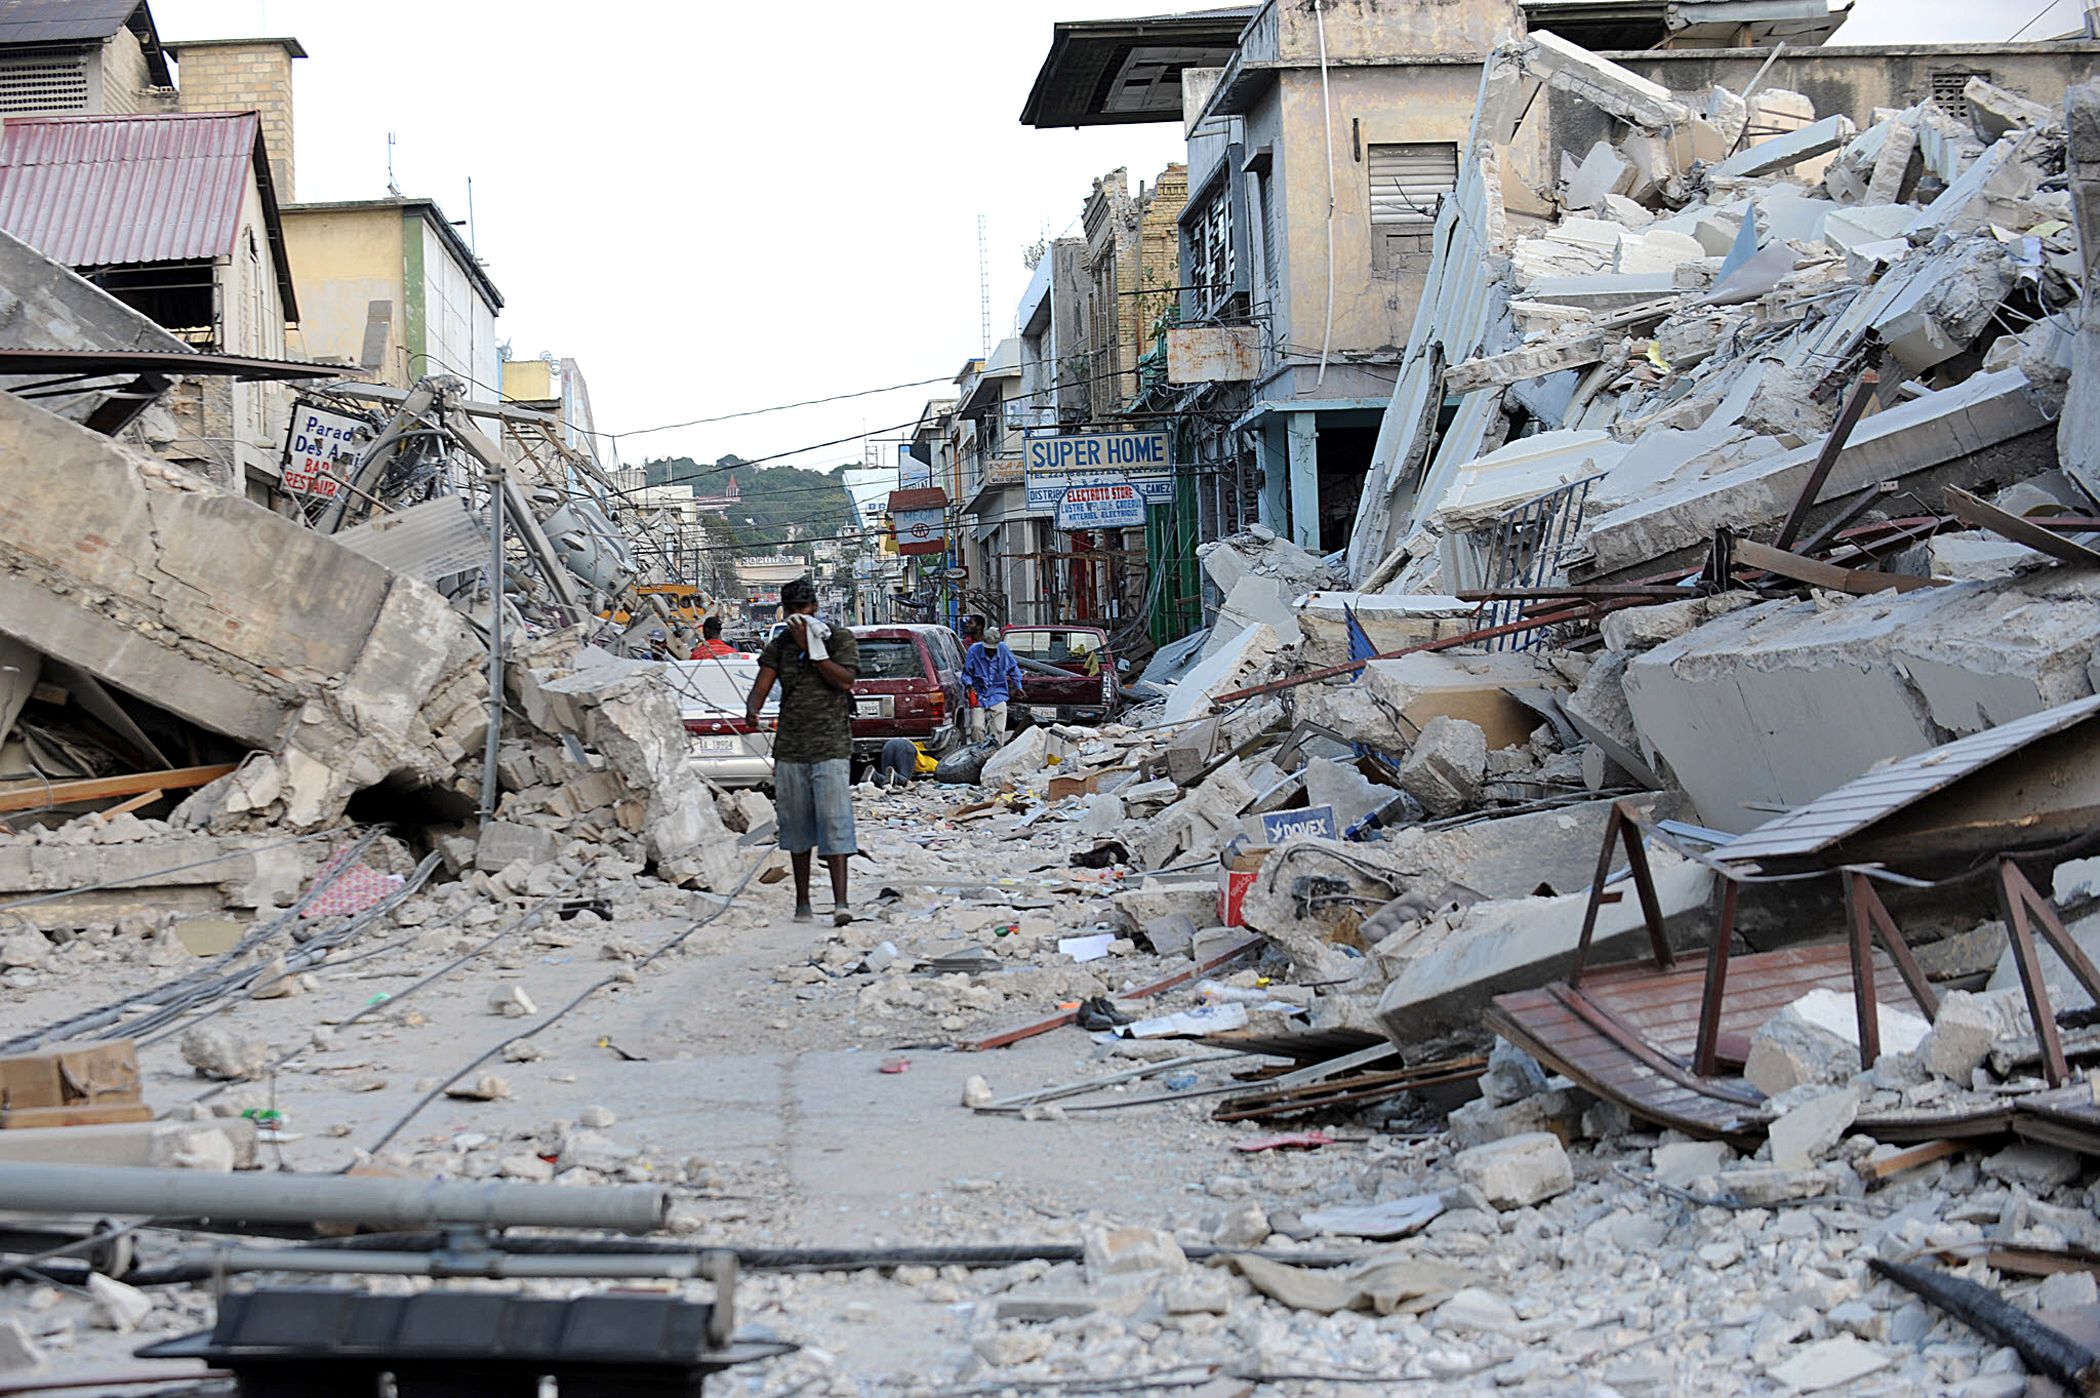 haiti earthquake relief